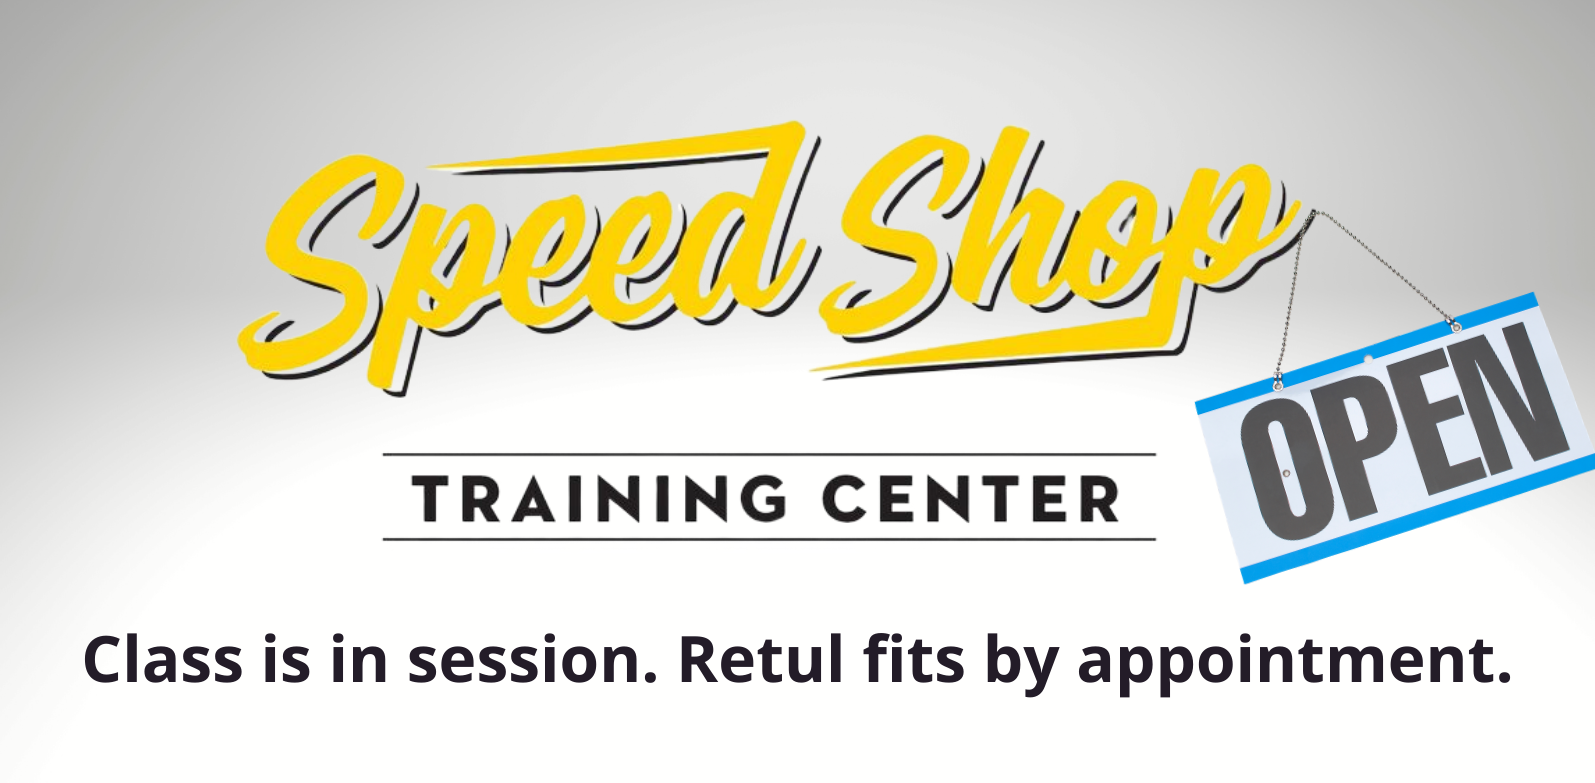 Speed Shop Open v2-2.png